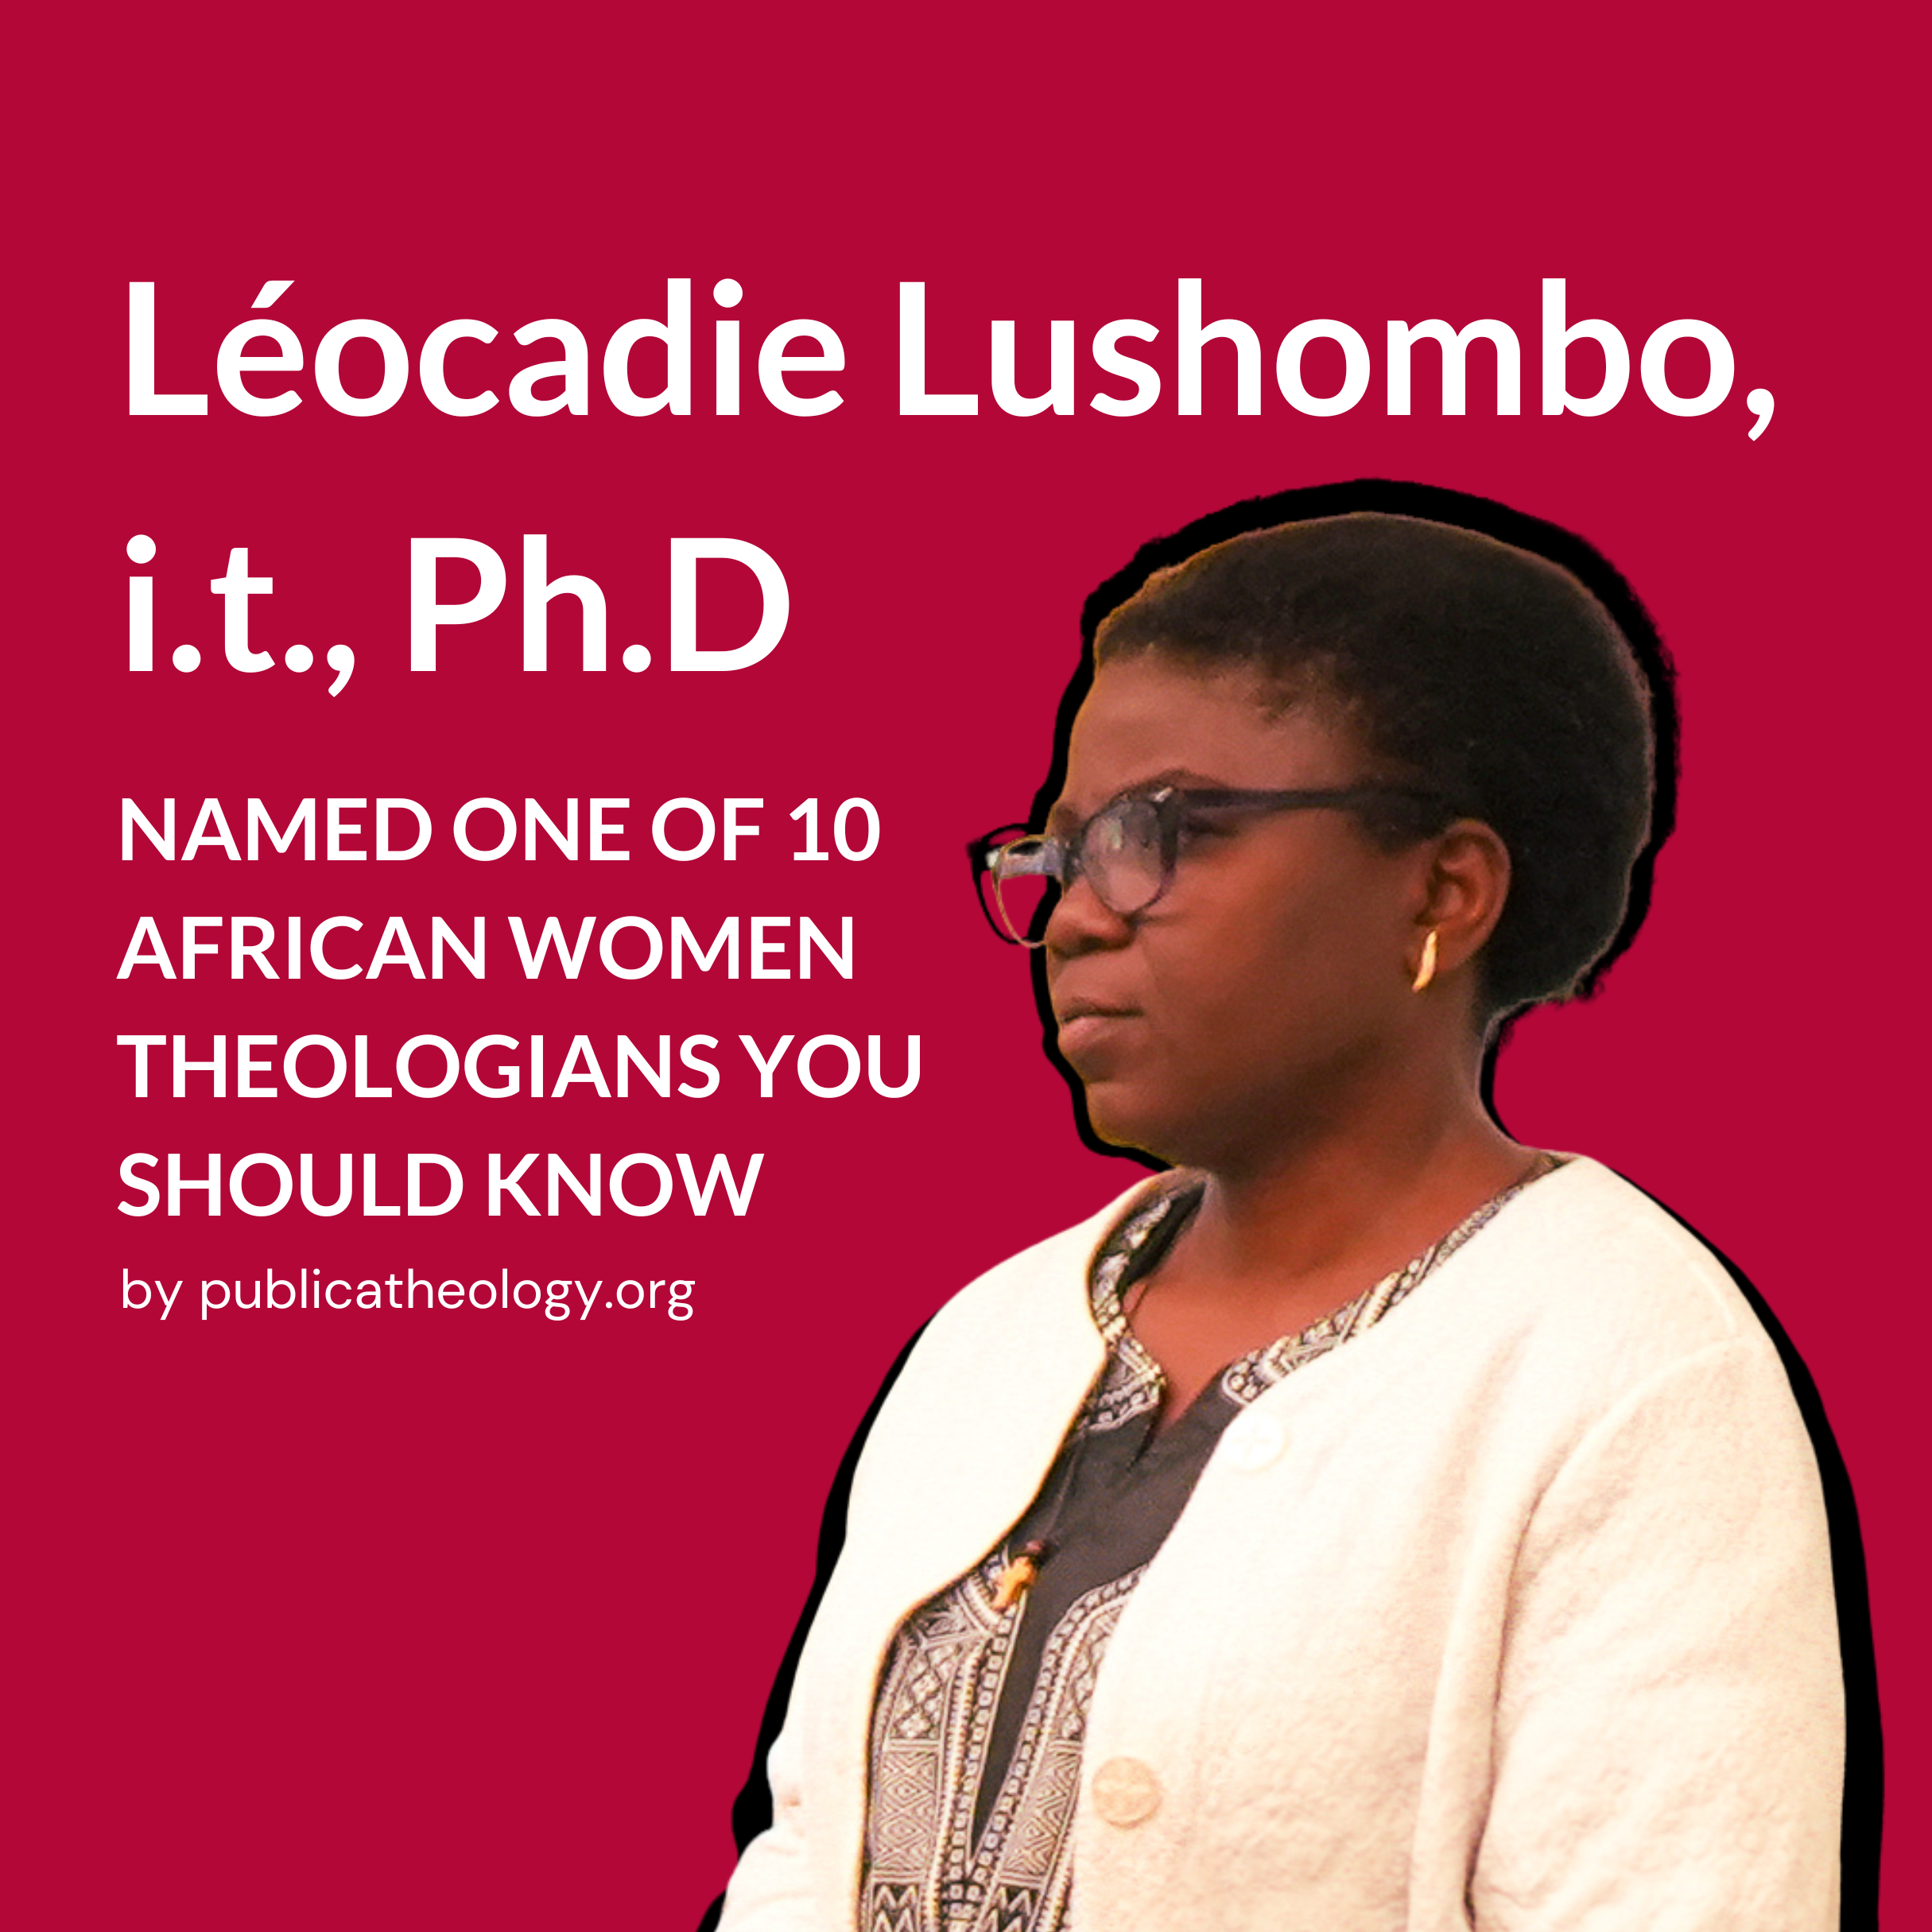 Professor Lushombo